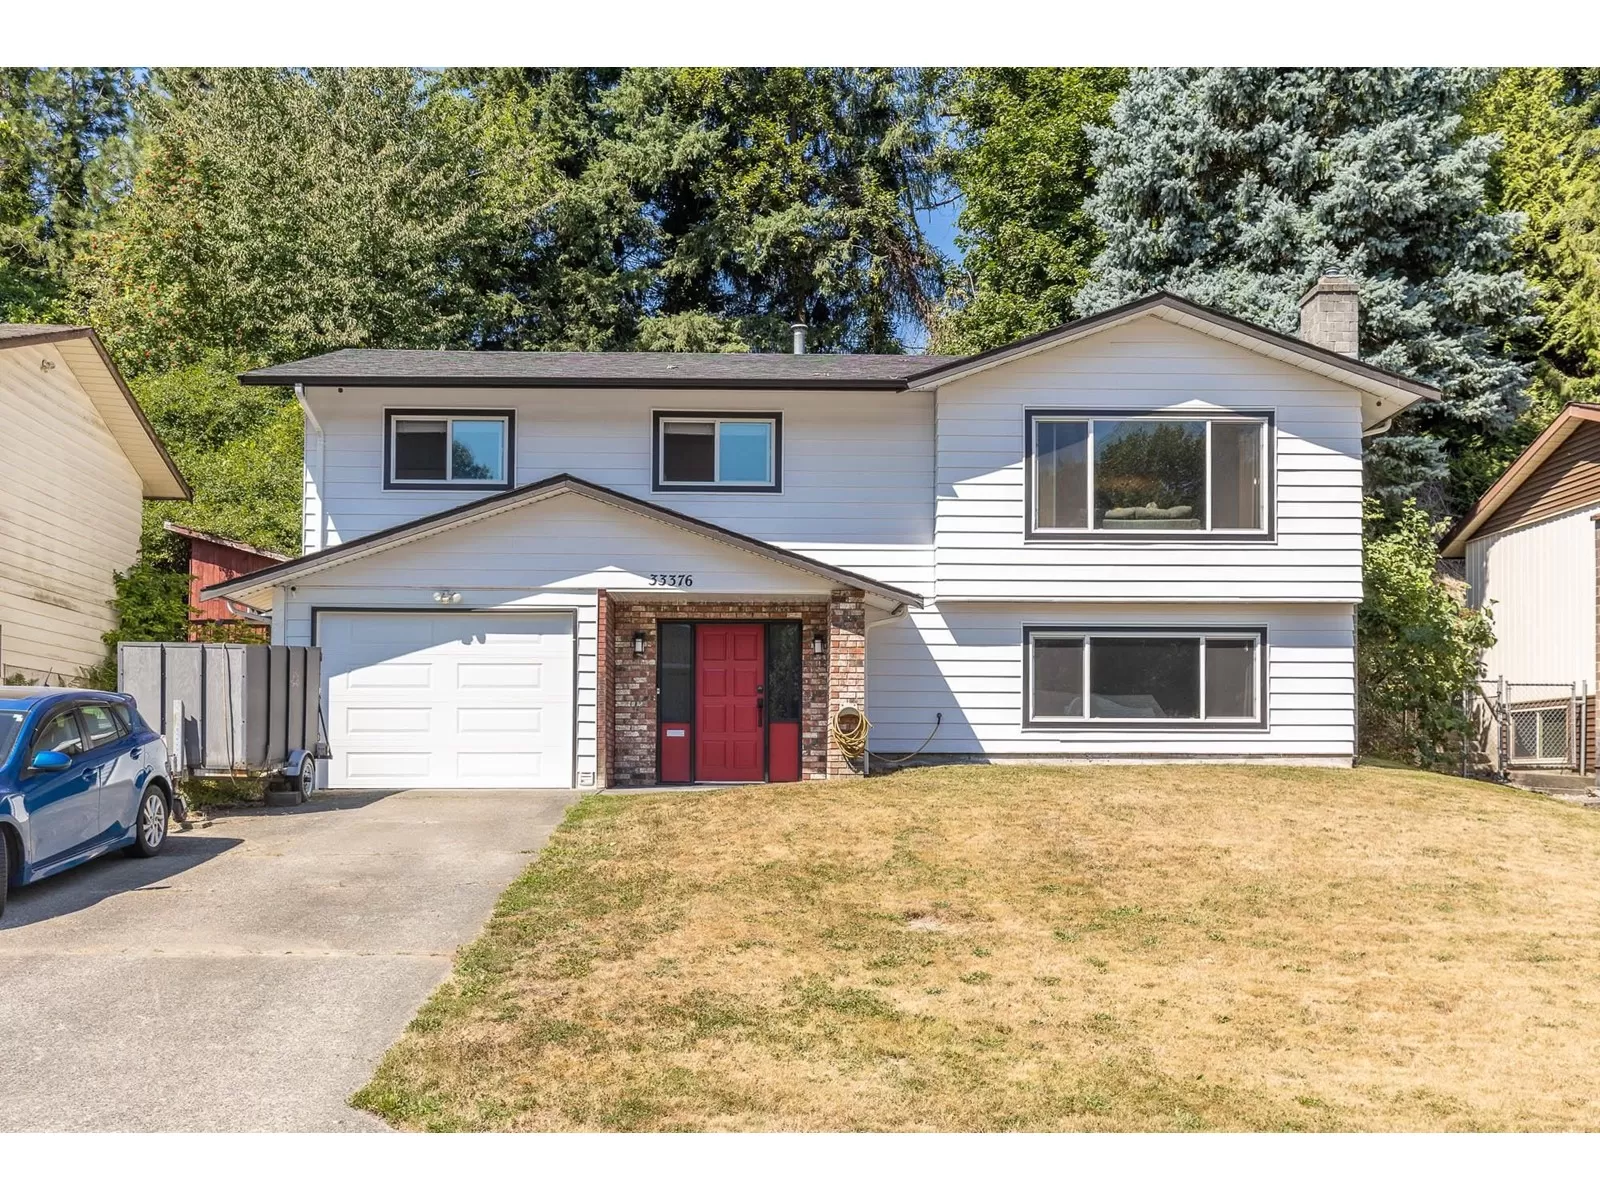 House for rent: 33376 Wren Crescent, Abbotsford, British Columbia V2S 5W1